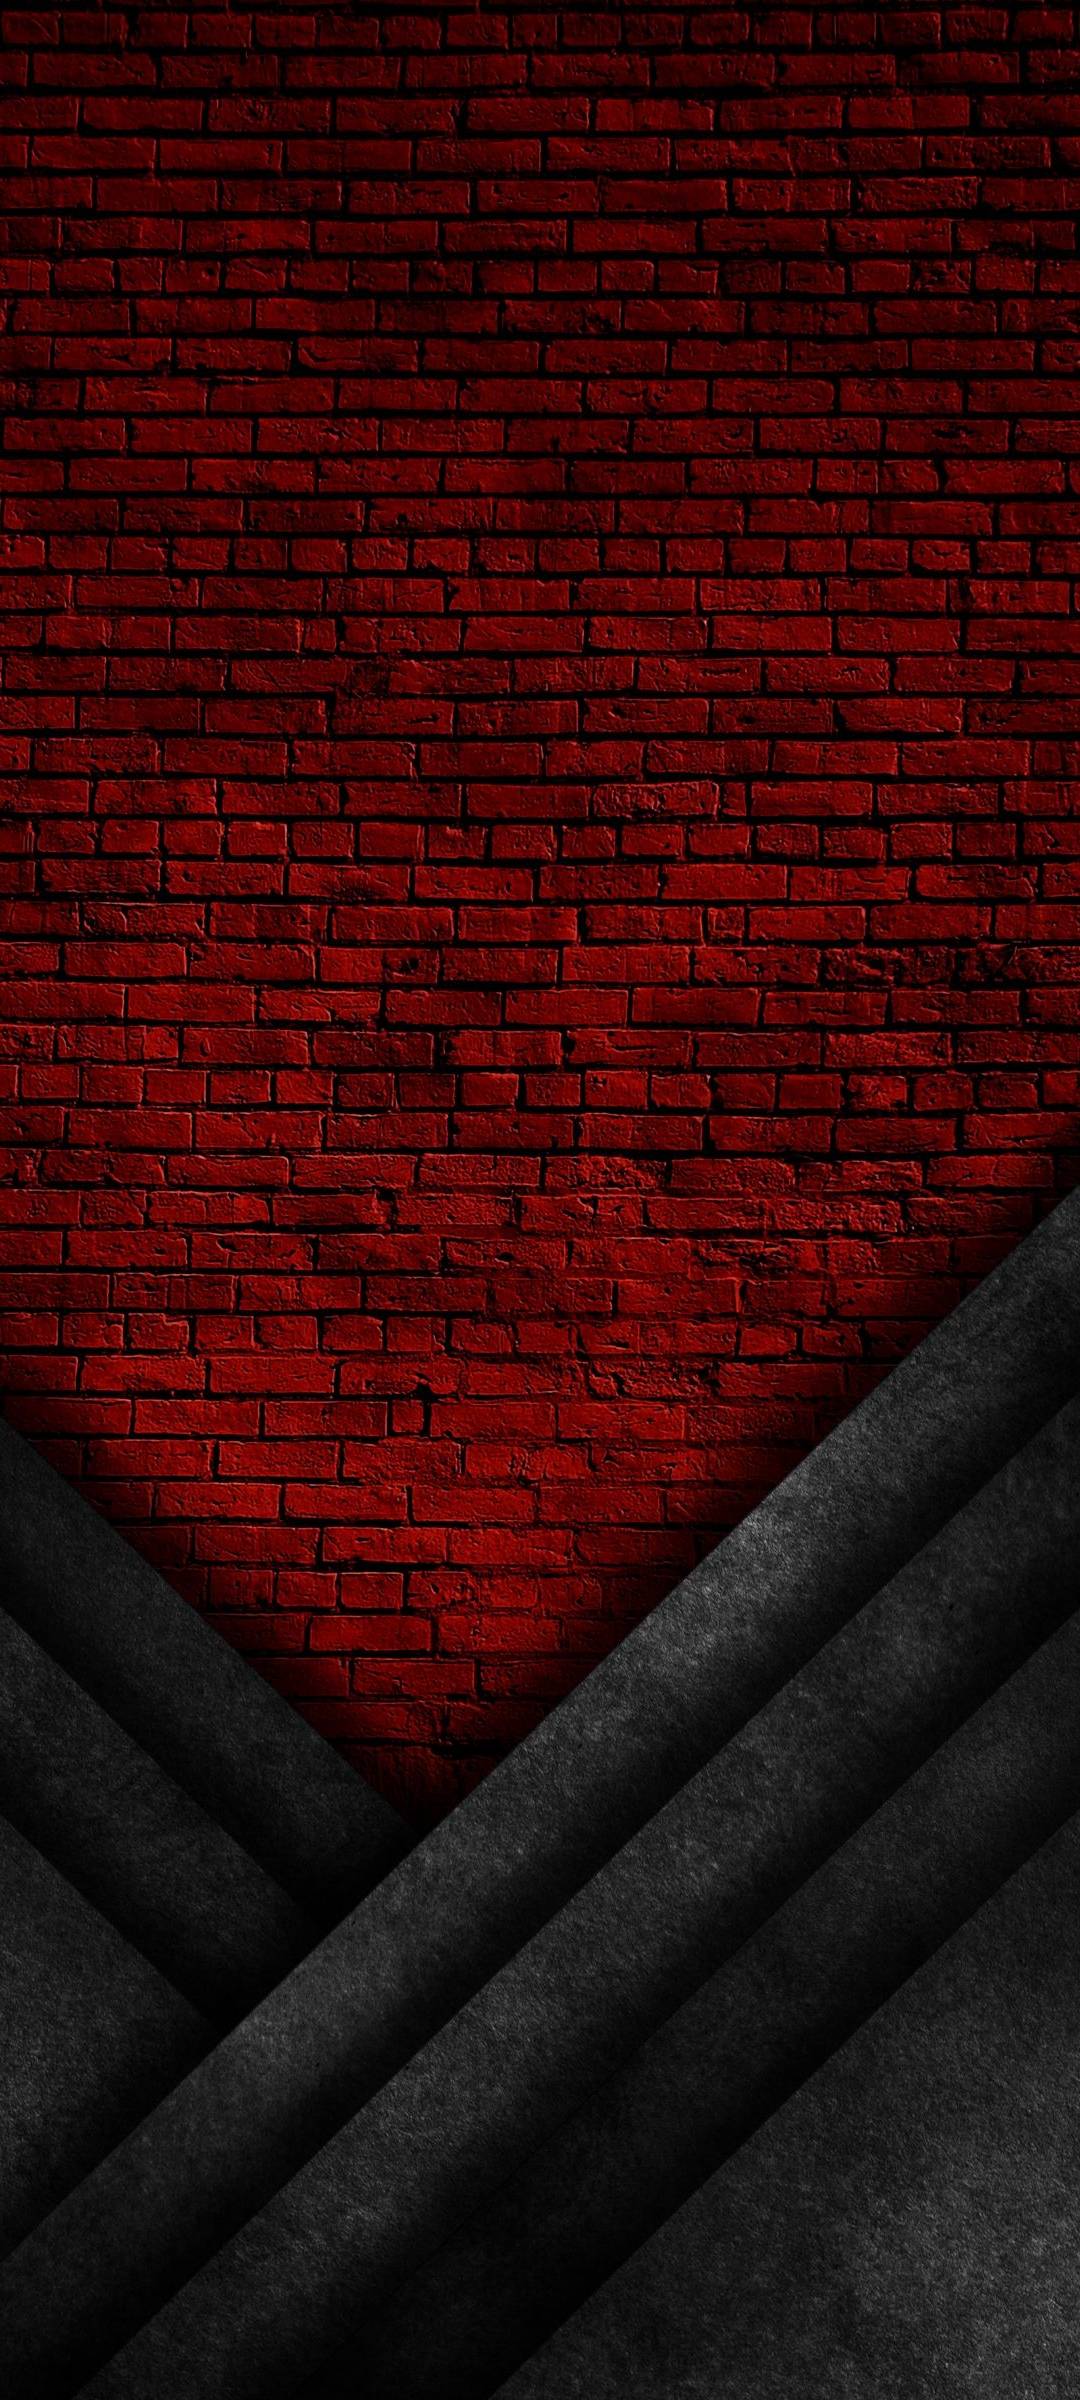 Dark Grunge Weathered Brick Wall Background, Full Free Stock Photo and  Image 216482534